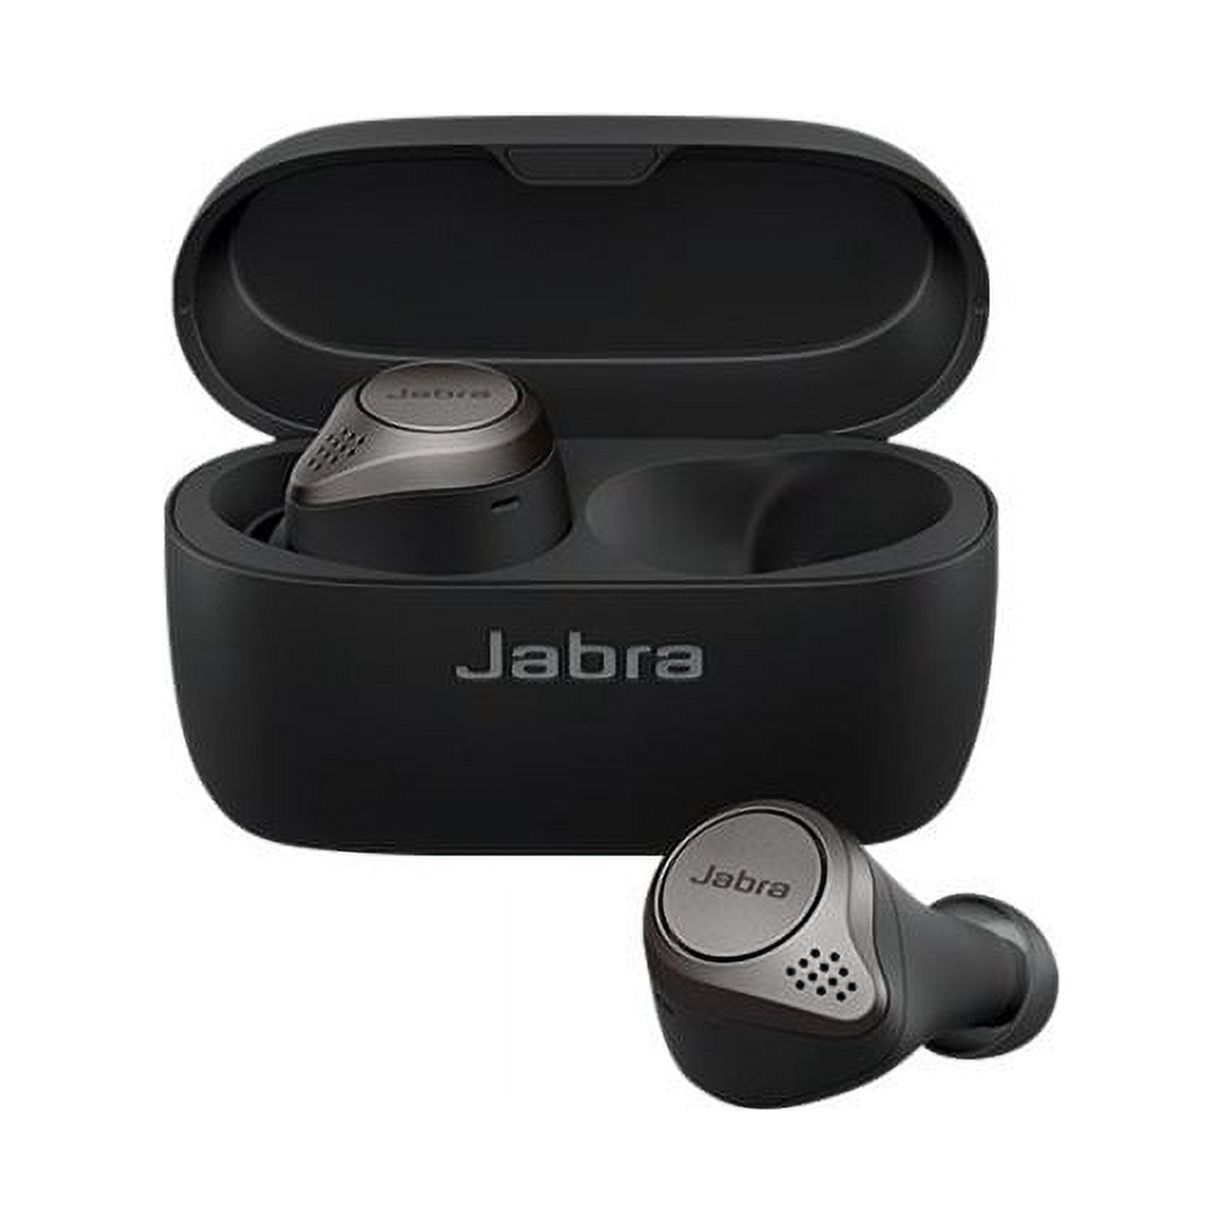 Jabra Elite 100-99090001-14 75T True Wireless Earphones with Mic Black - image 2 of 3